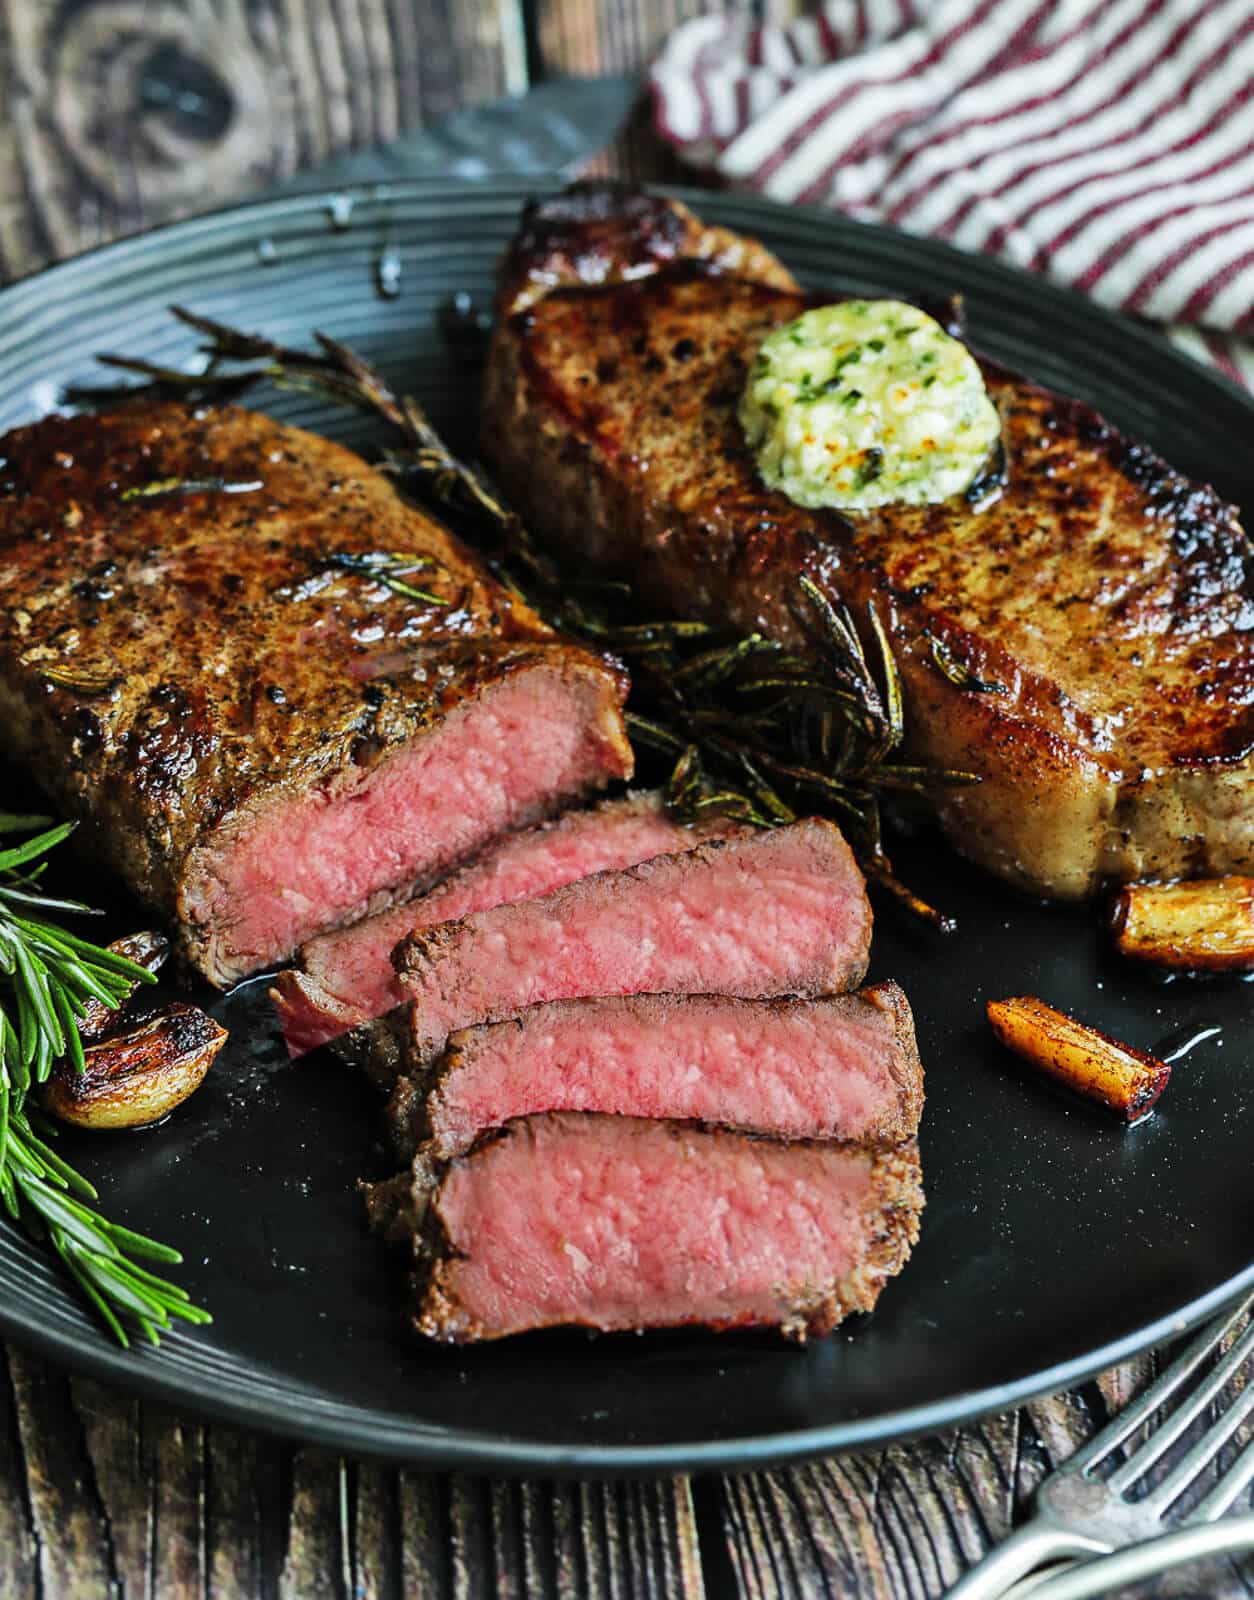 https://www.grillseeker.com/wp-content/uploads/2019/09/pan-sear-steak-sliced-on-a-plate-close-up.jpg